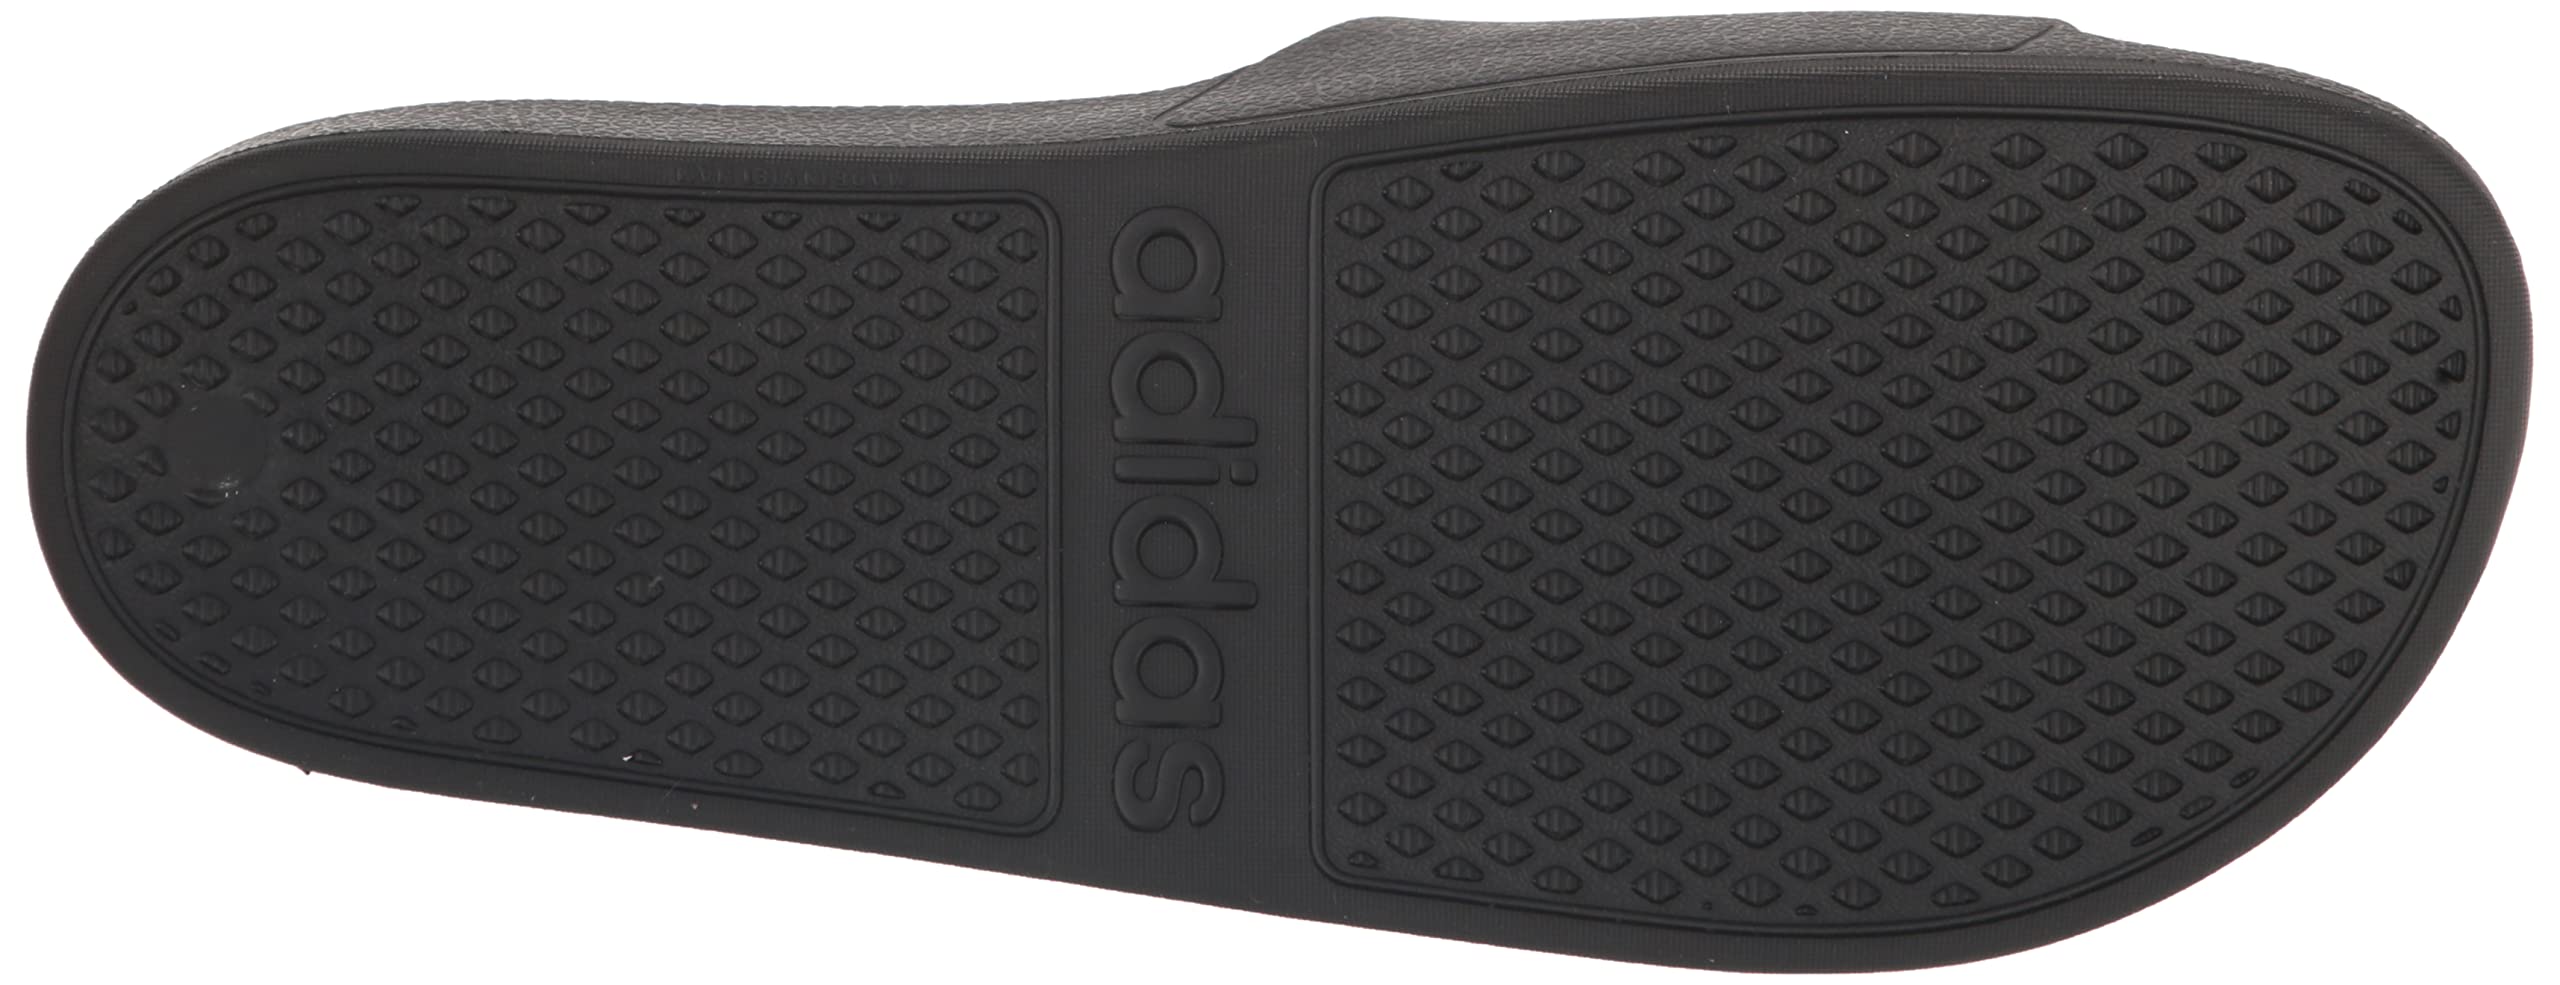 adidas Men's Slide Sandals